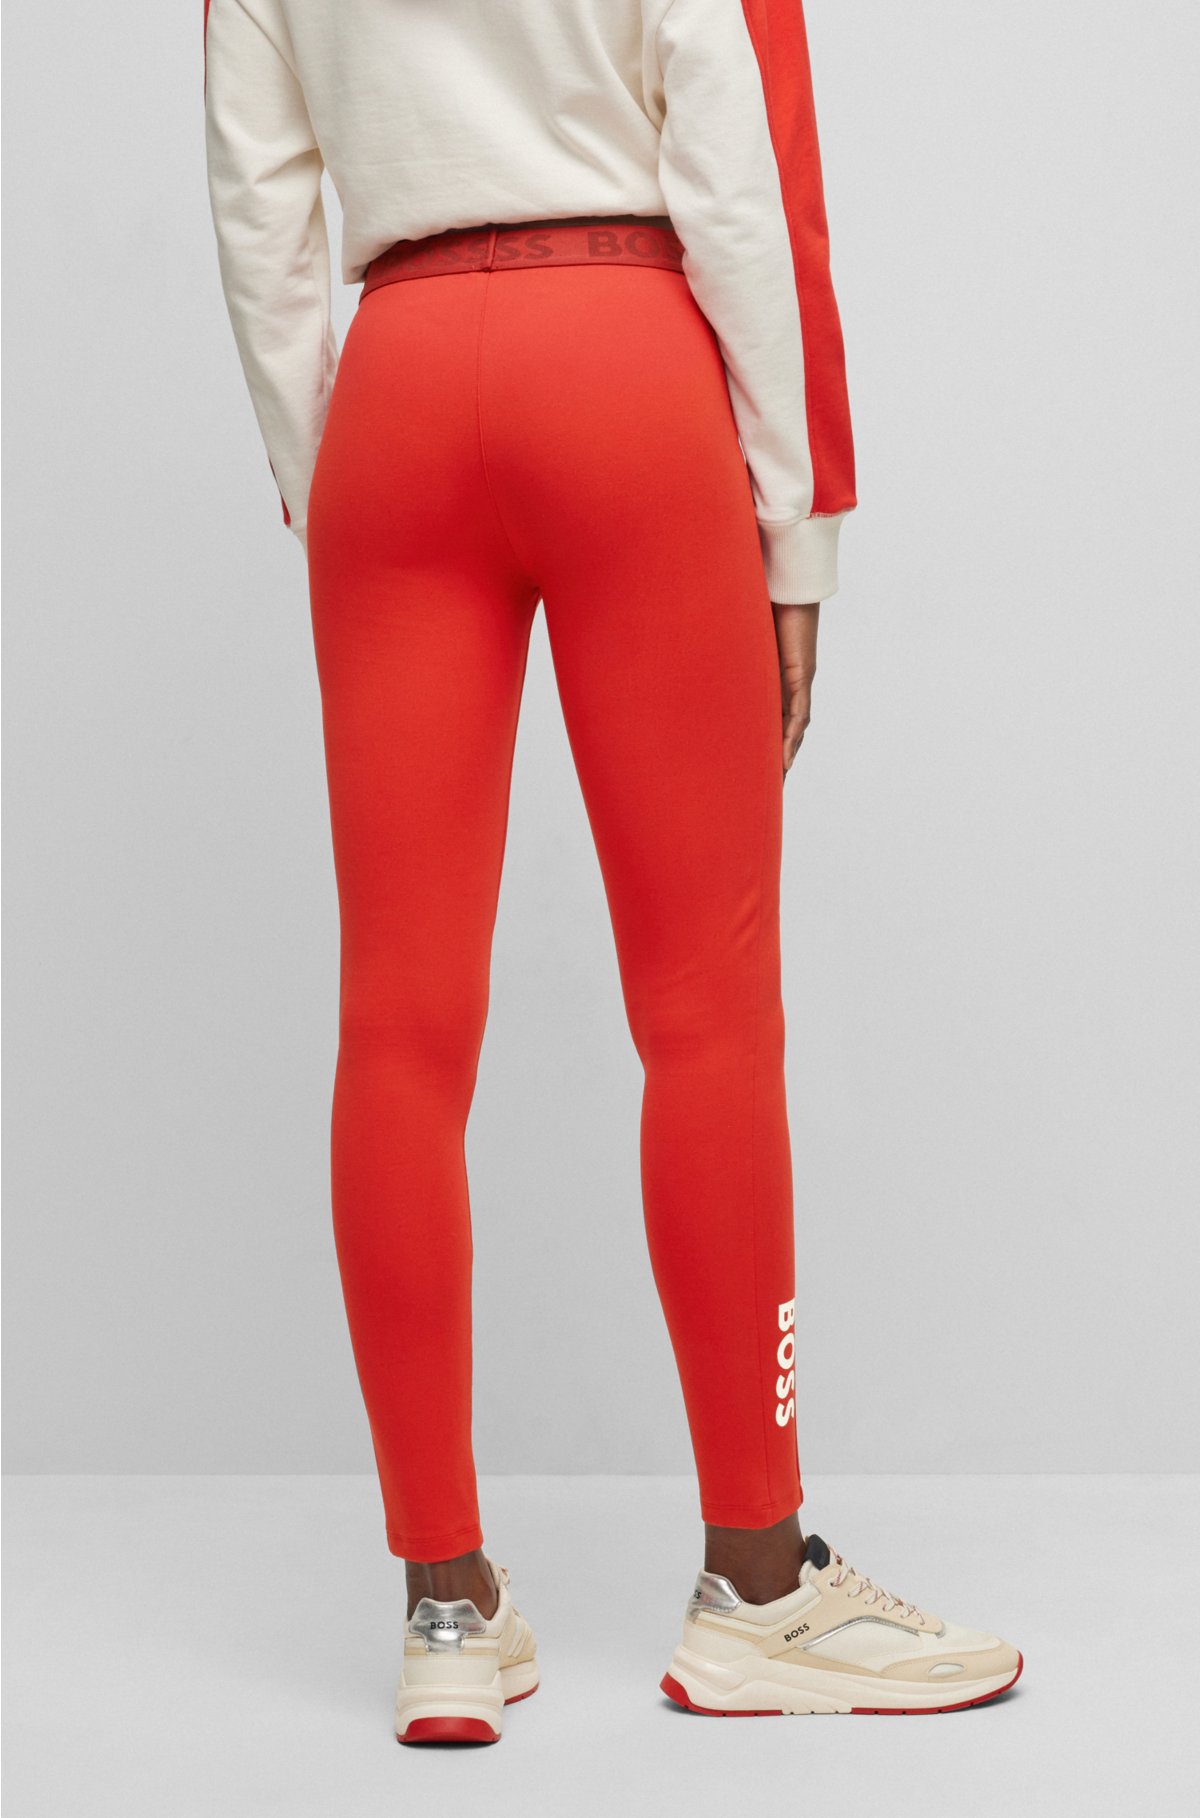 Veronderstellen Turbulentie Smelten BOSS - BOSS x Alica Schmidt extra-slim-fit leggings with logo details